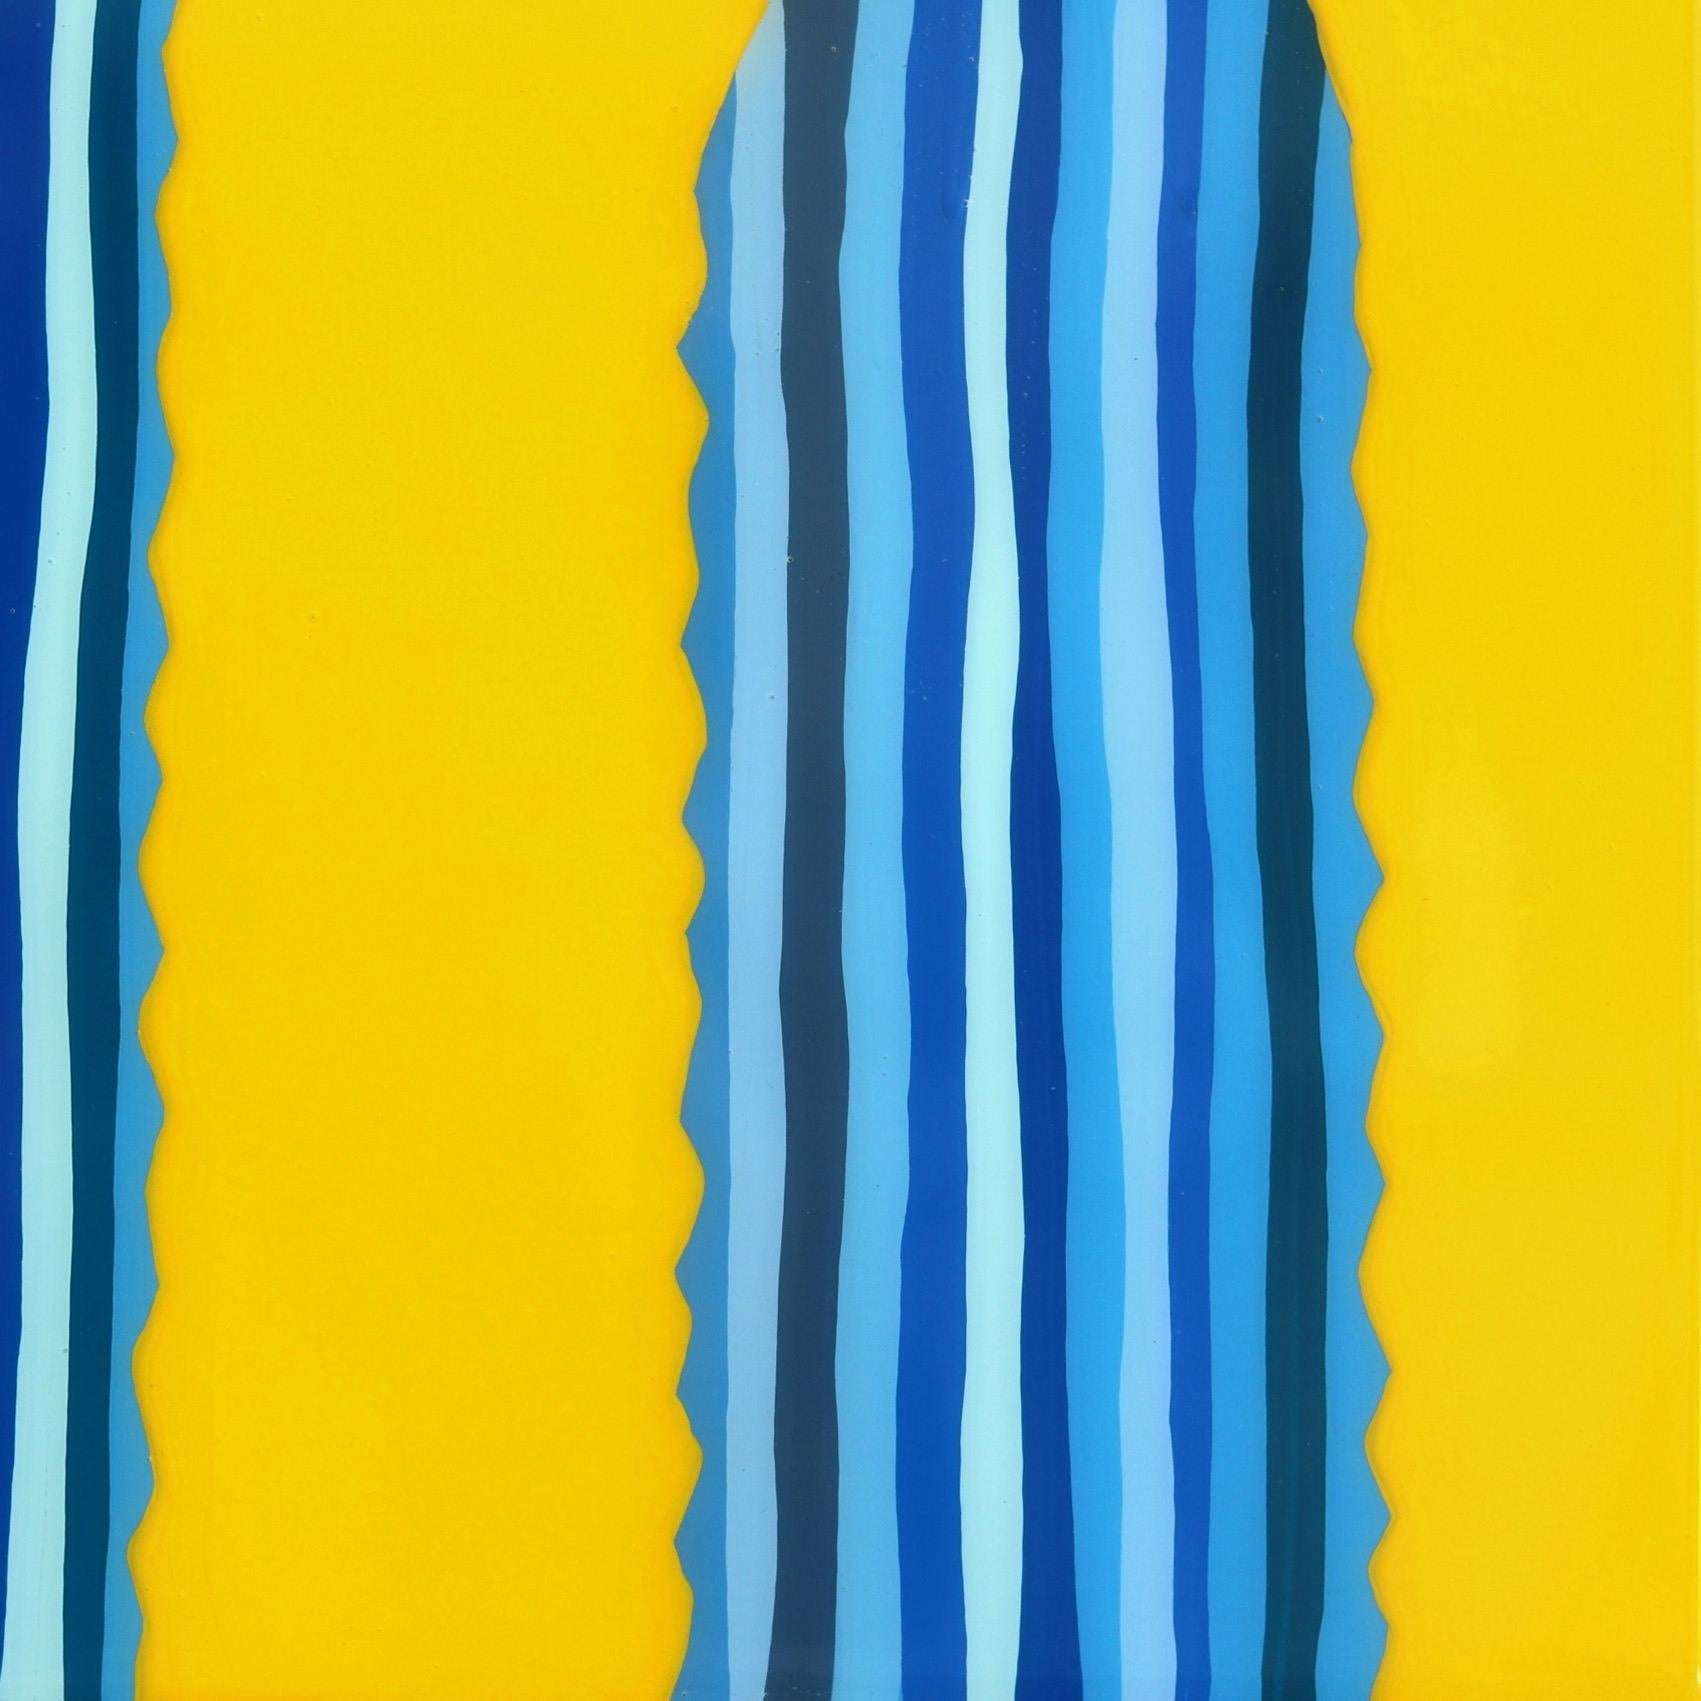 Mañana Amarilla- Vibrant Yellow Blue Southwest Inspired Pop Art Cactus Painting For Sale 4